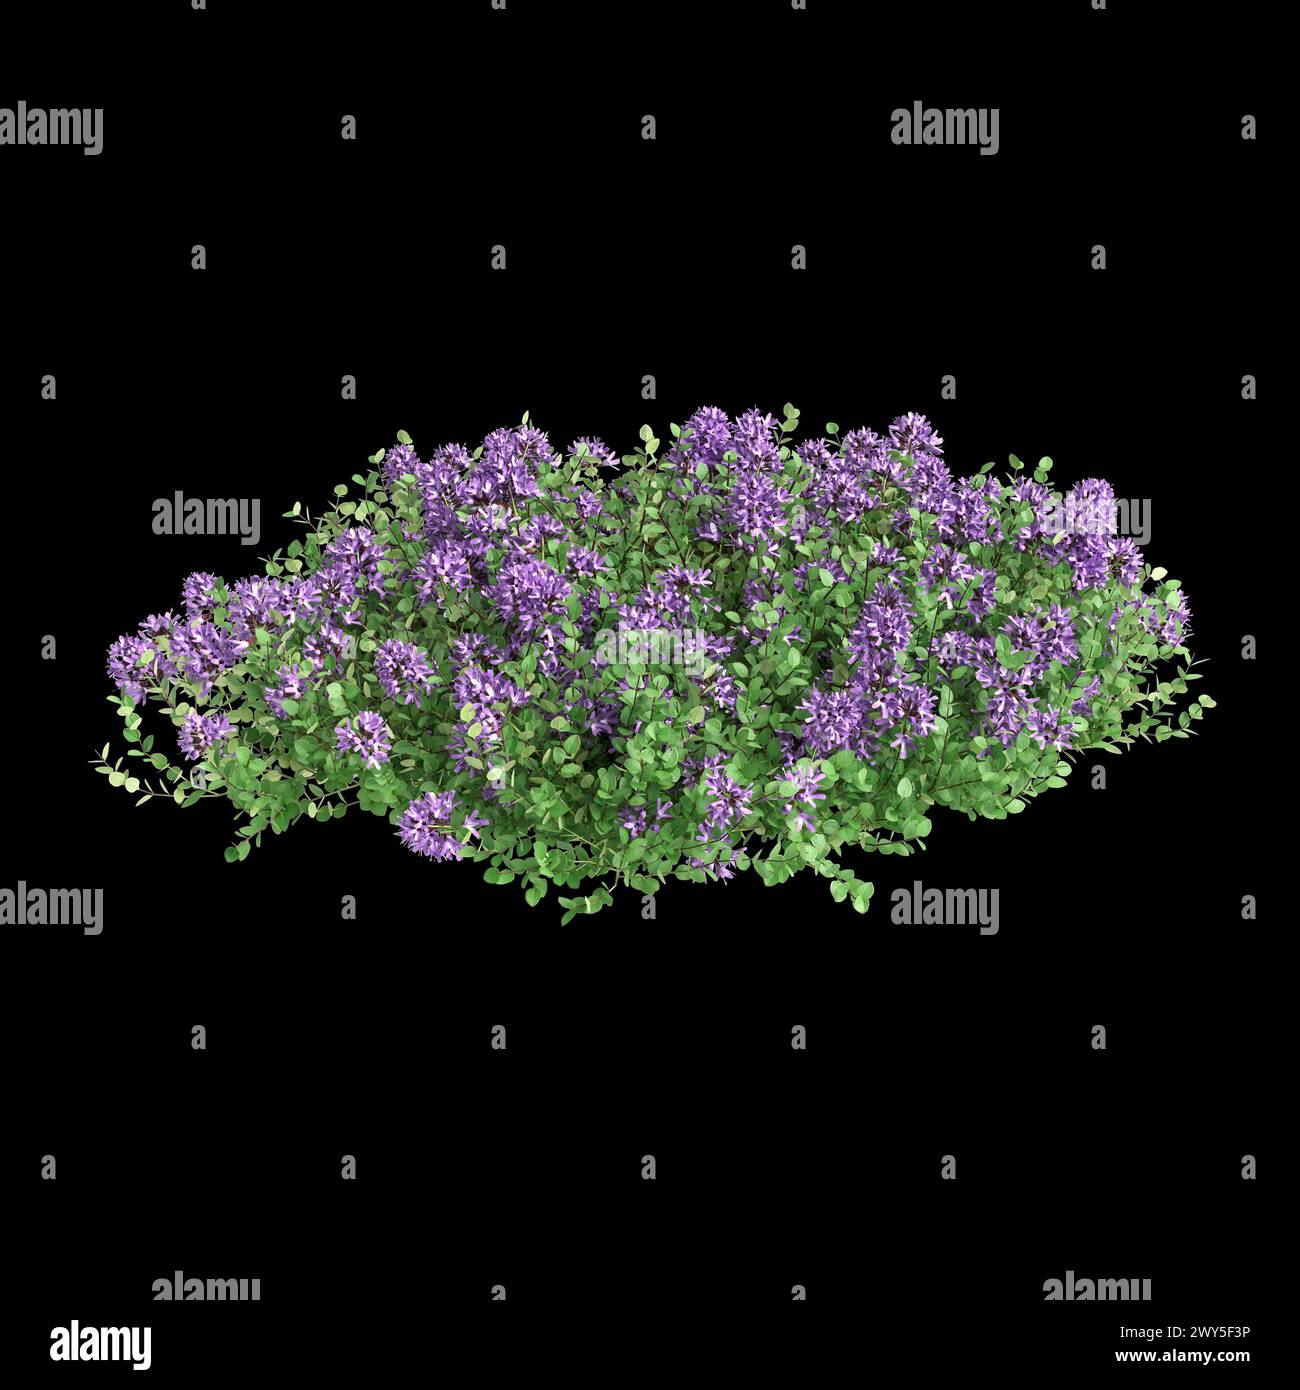 3d illustration of Thymus serpyllum bush isolated on black background Stock Photo